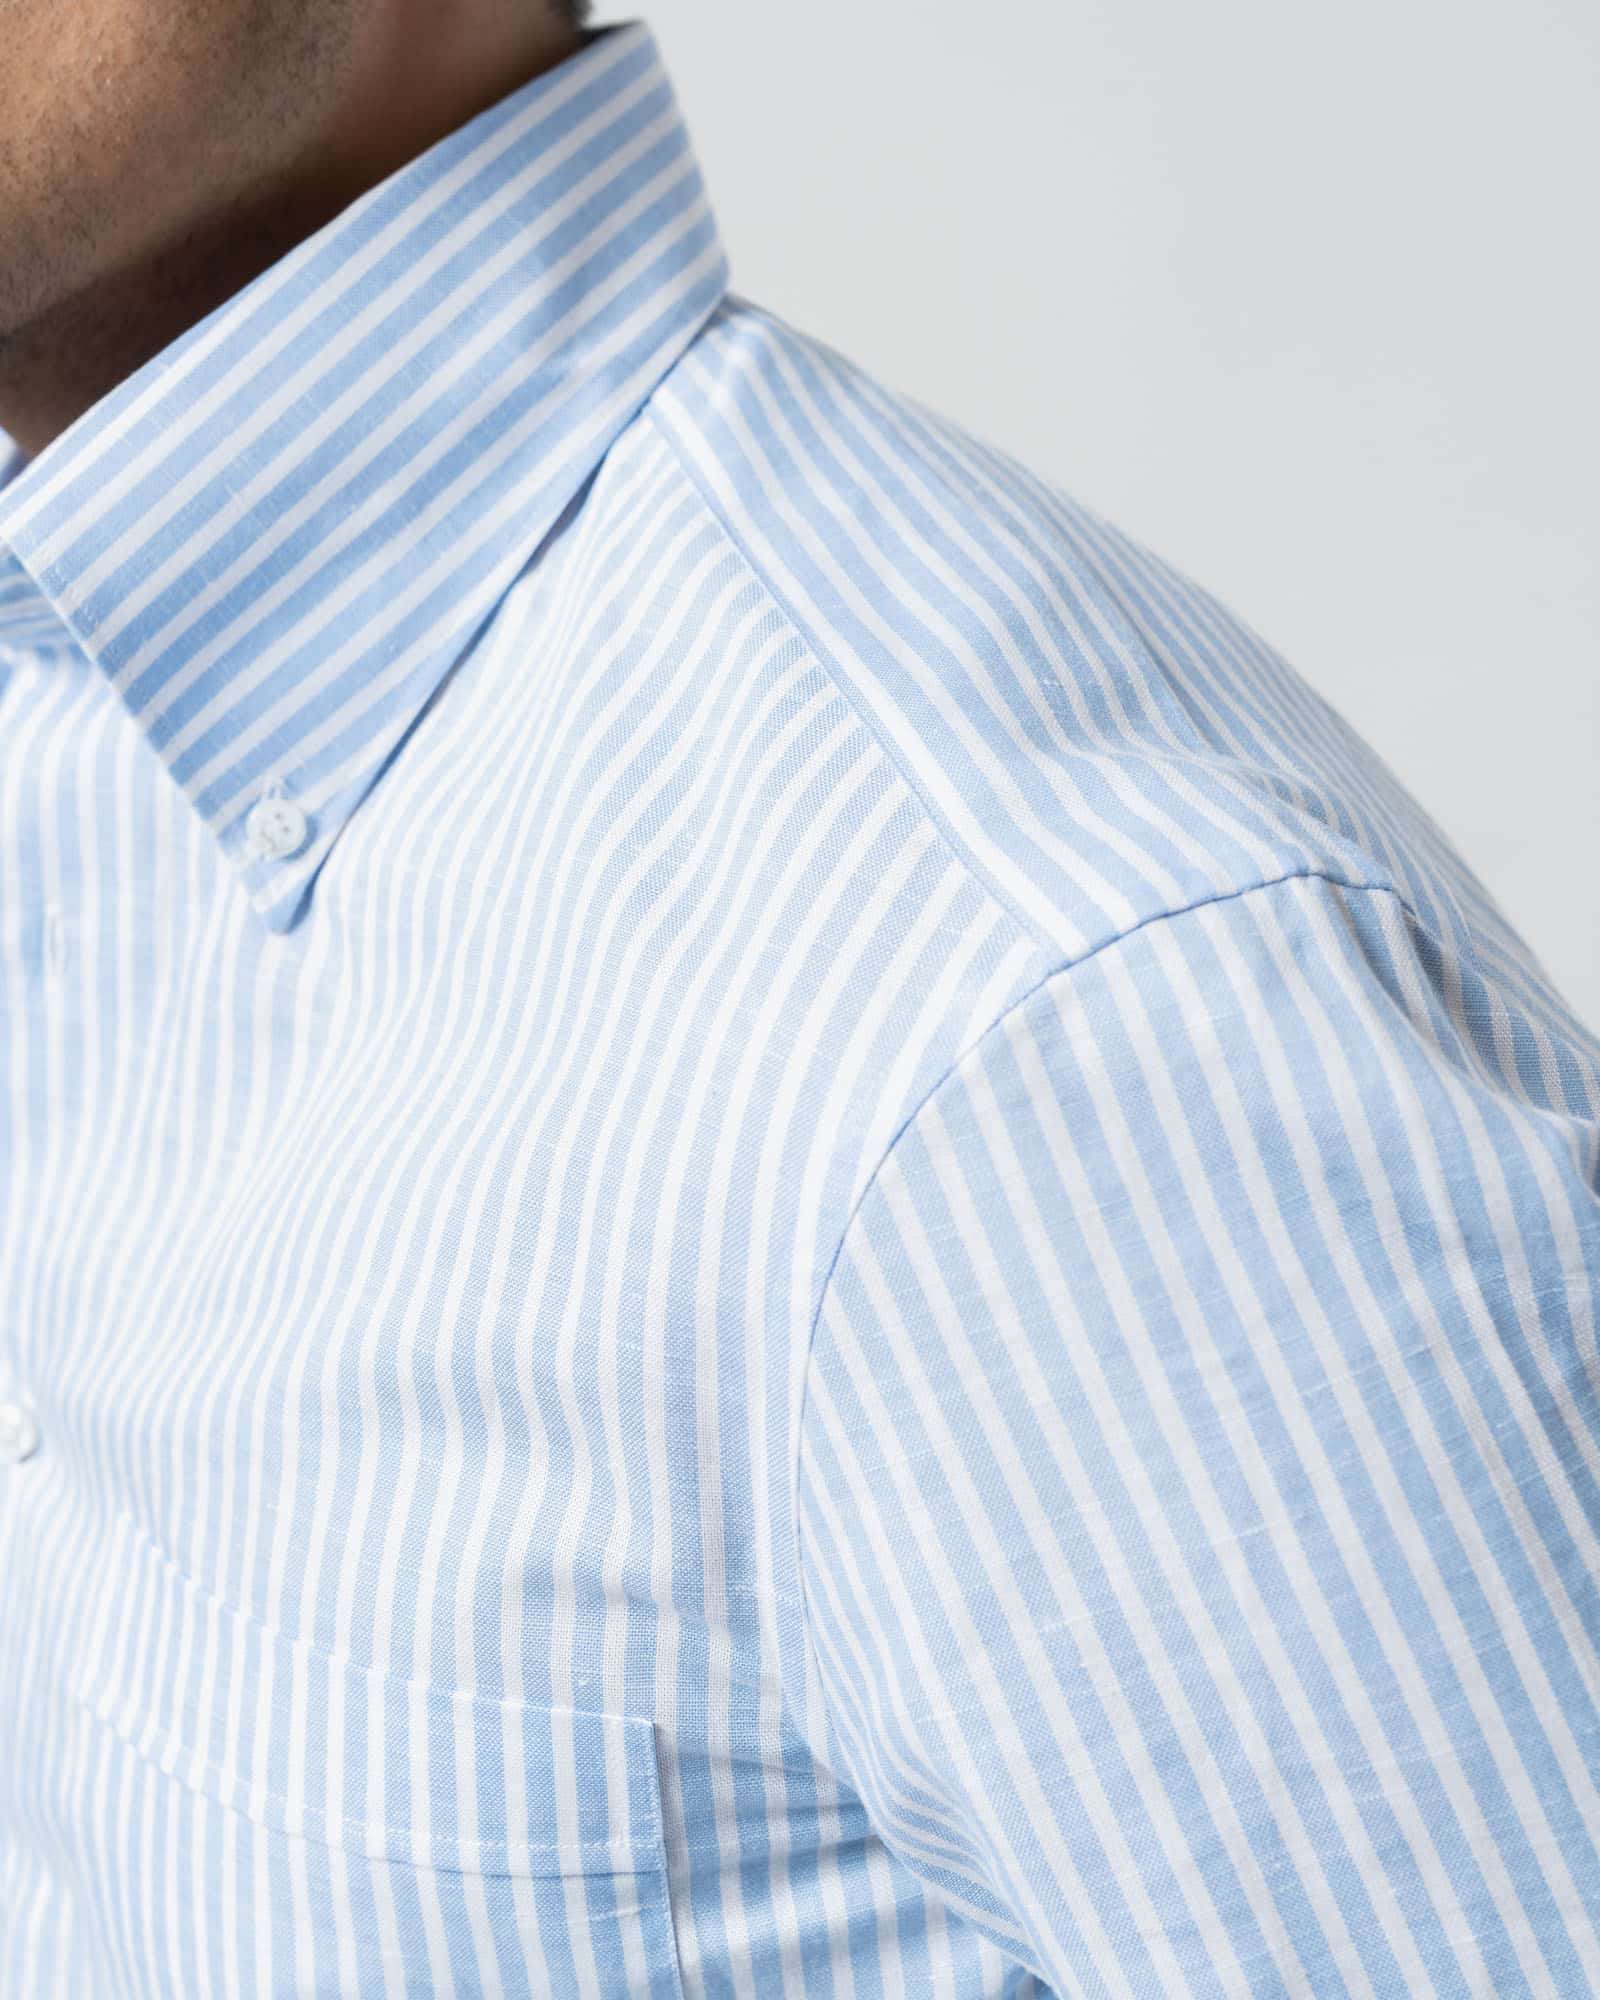 Shirt cotton linen striped light blue image 6